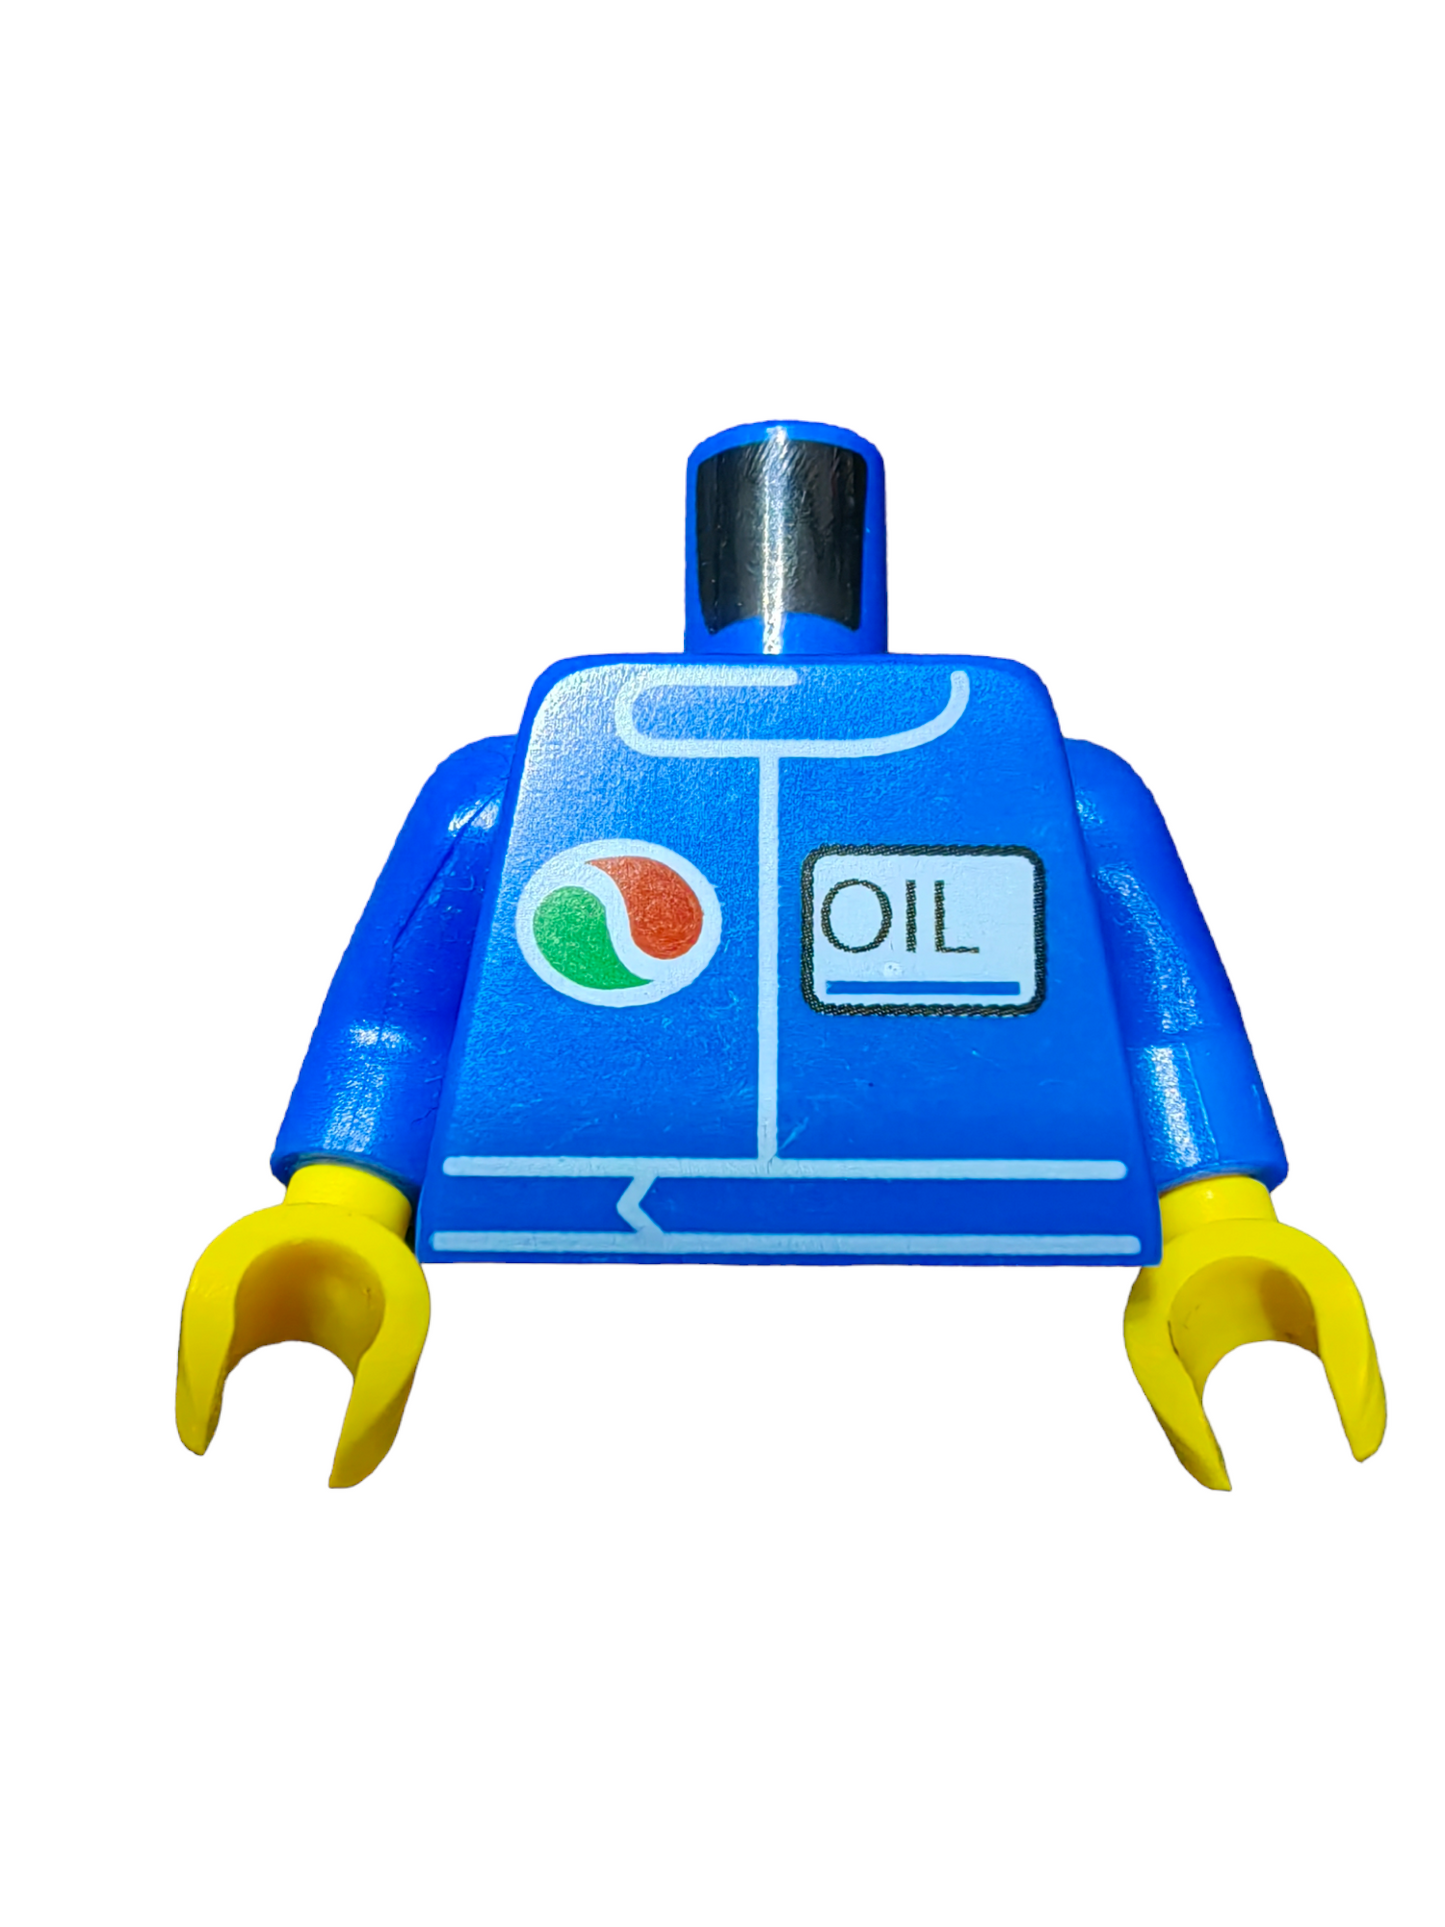 LEGO Torso, Octan Logo and 'OIL' Pattern RETIRED 2012 - UB1435